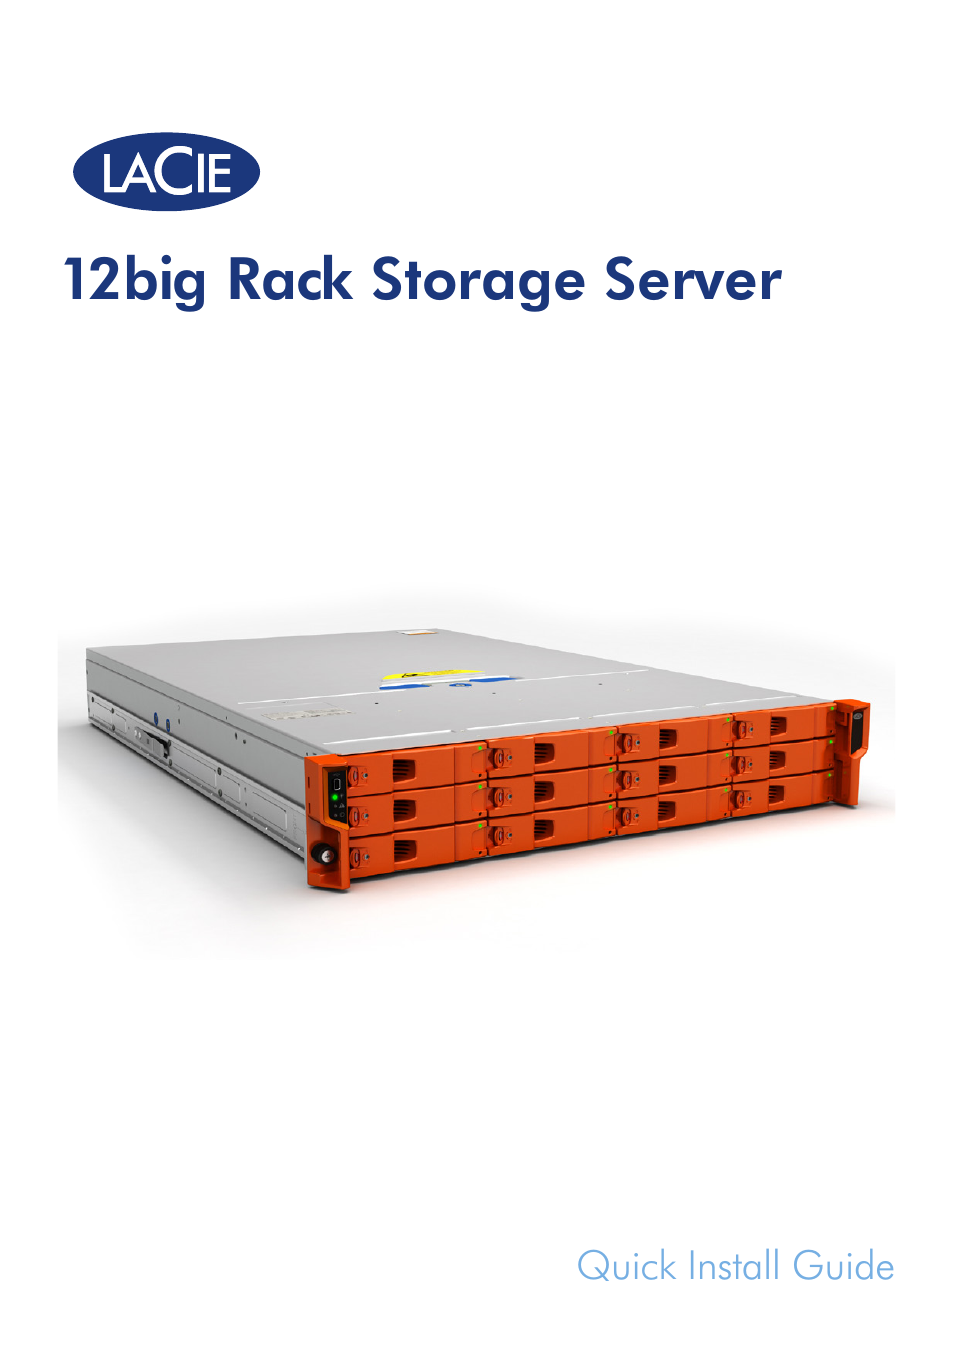 LaCie 12big Rack Storage Server User Manual | 11 pages